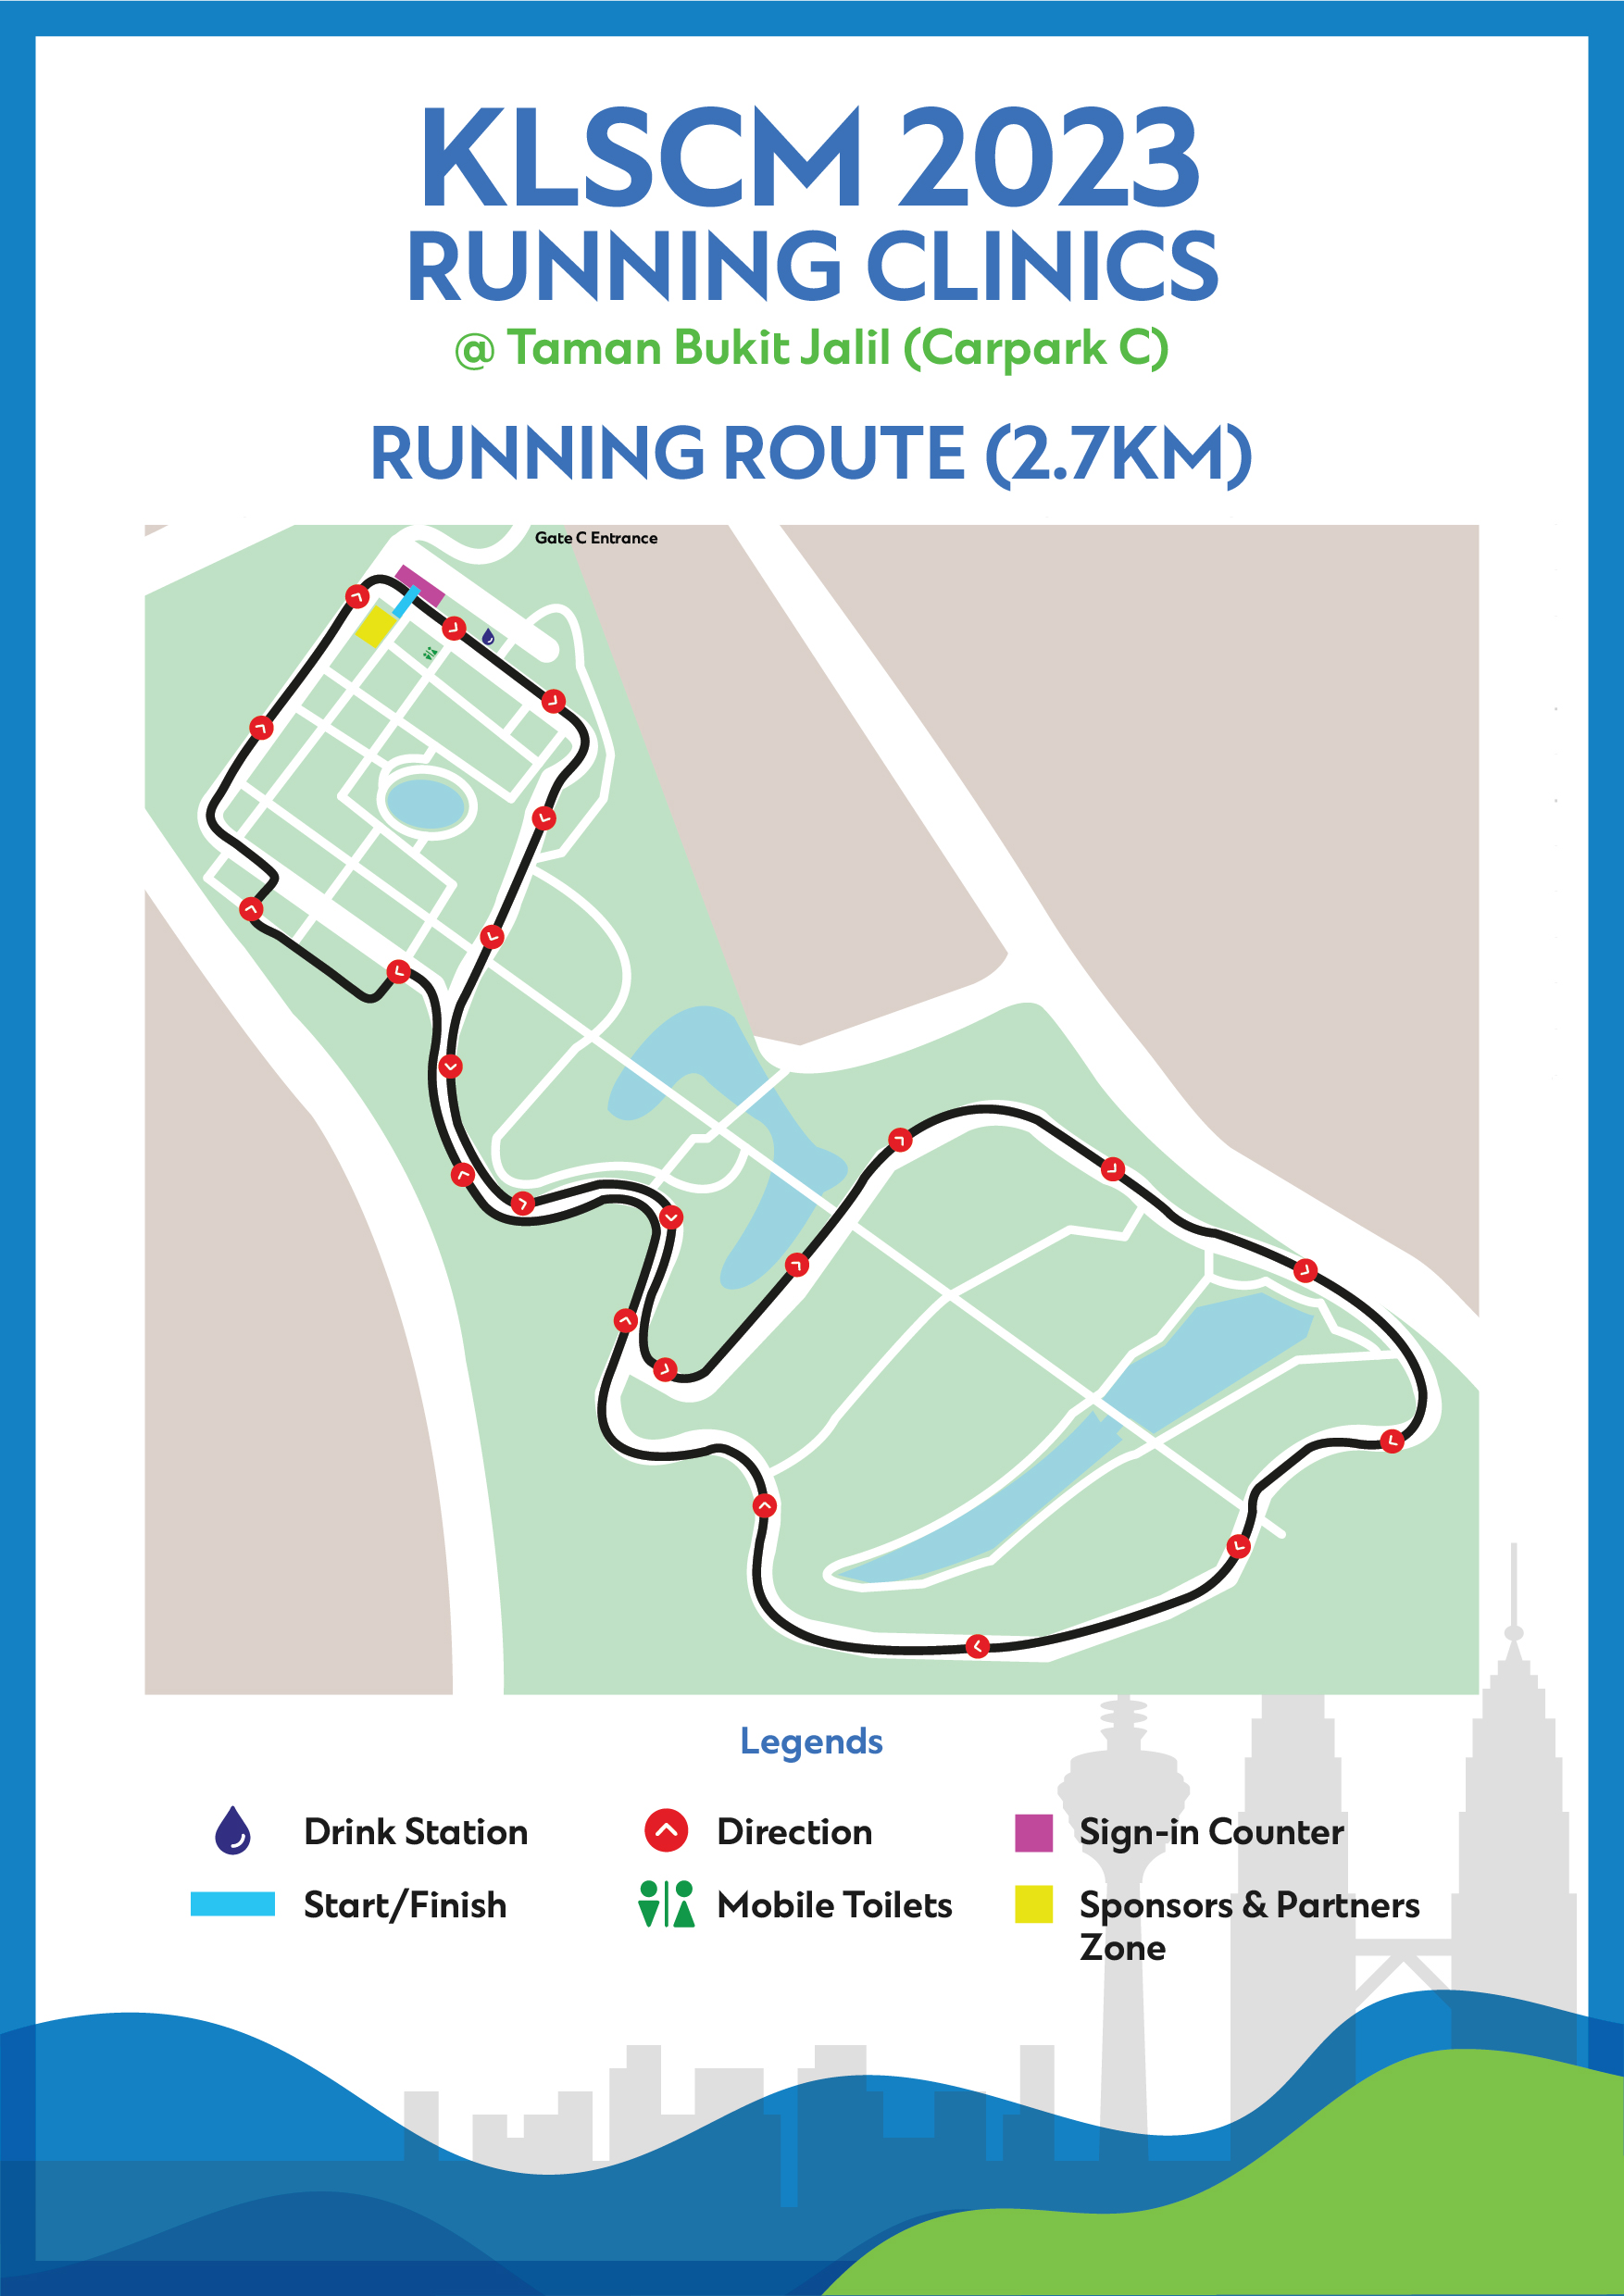 KL Marathon Training / Running Clinics / Running Route